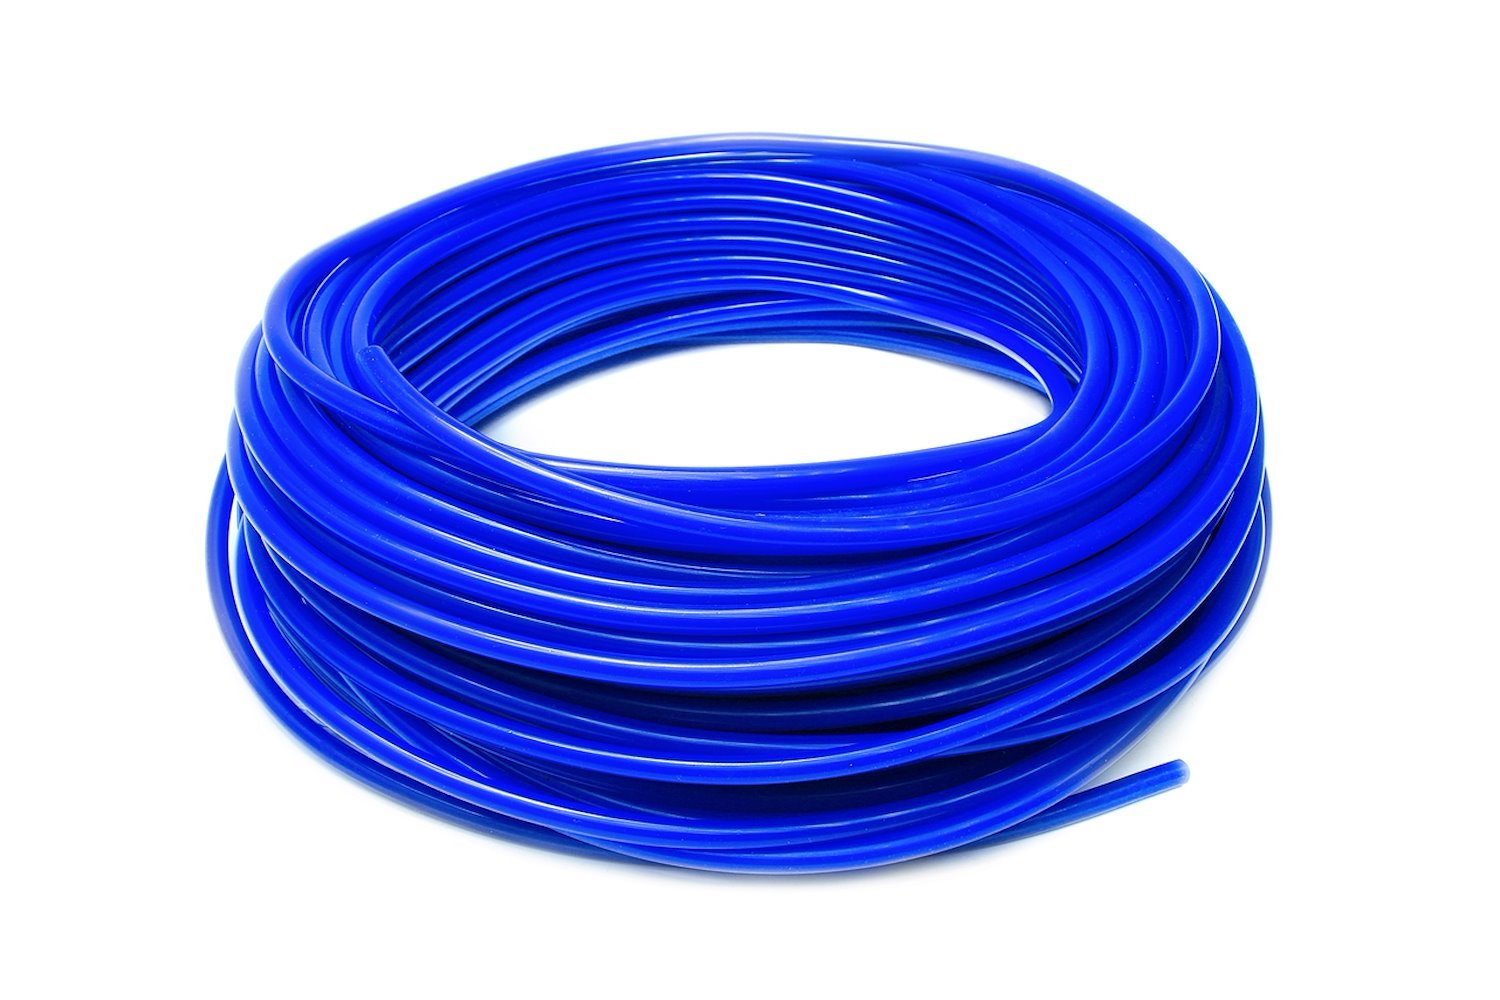 HTSVH127-BLUEx100 High-Temperature Silicone Vacuum Hose Tubing, 1/2 in. ID, 100 ft. Roll, Blue